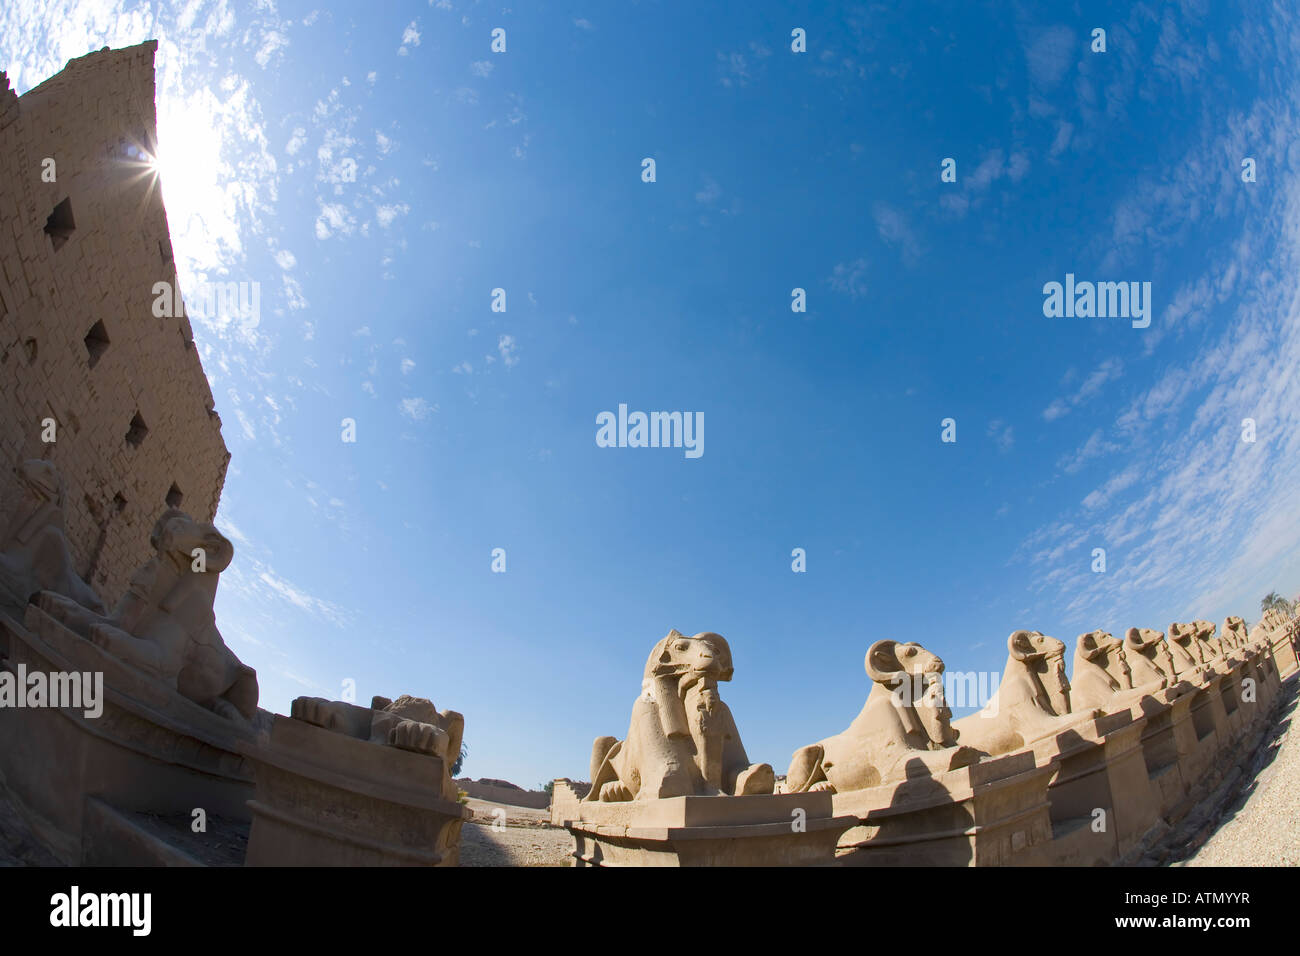 Ram puntas avenida esfinge Templo de Karnak Luxor Egipto África del Norte Foto de stock